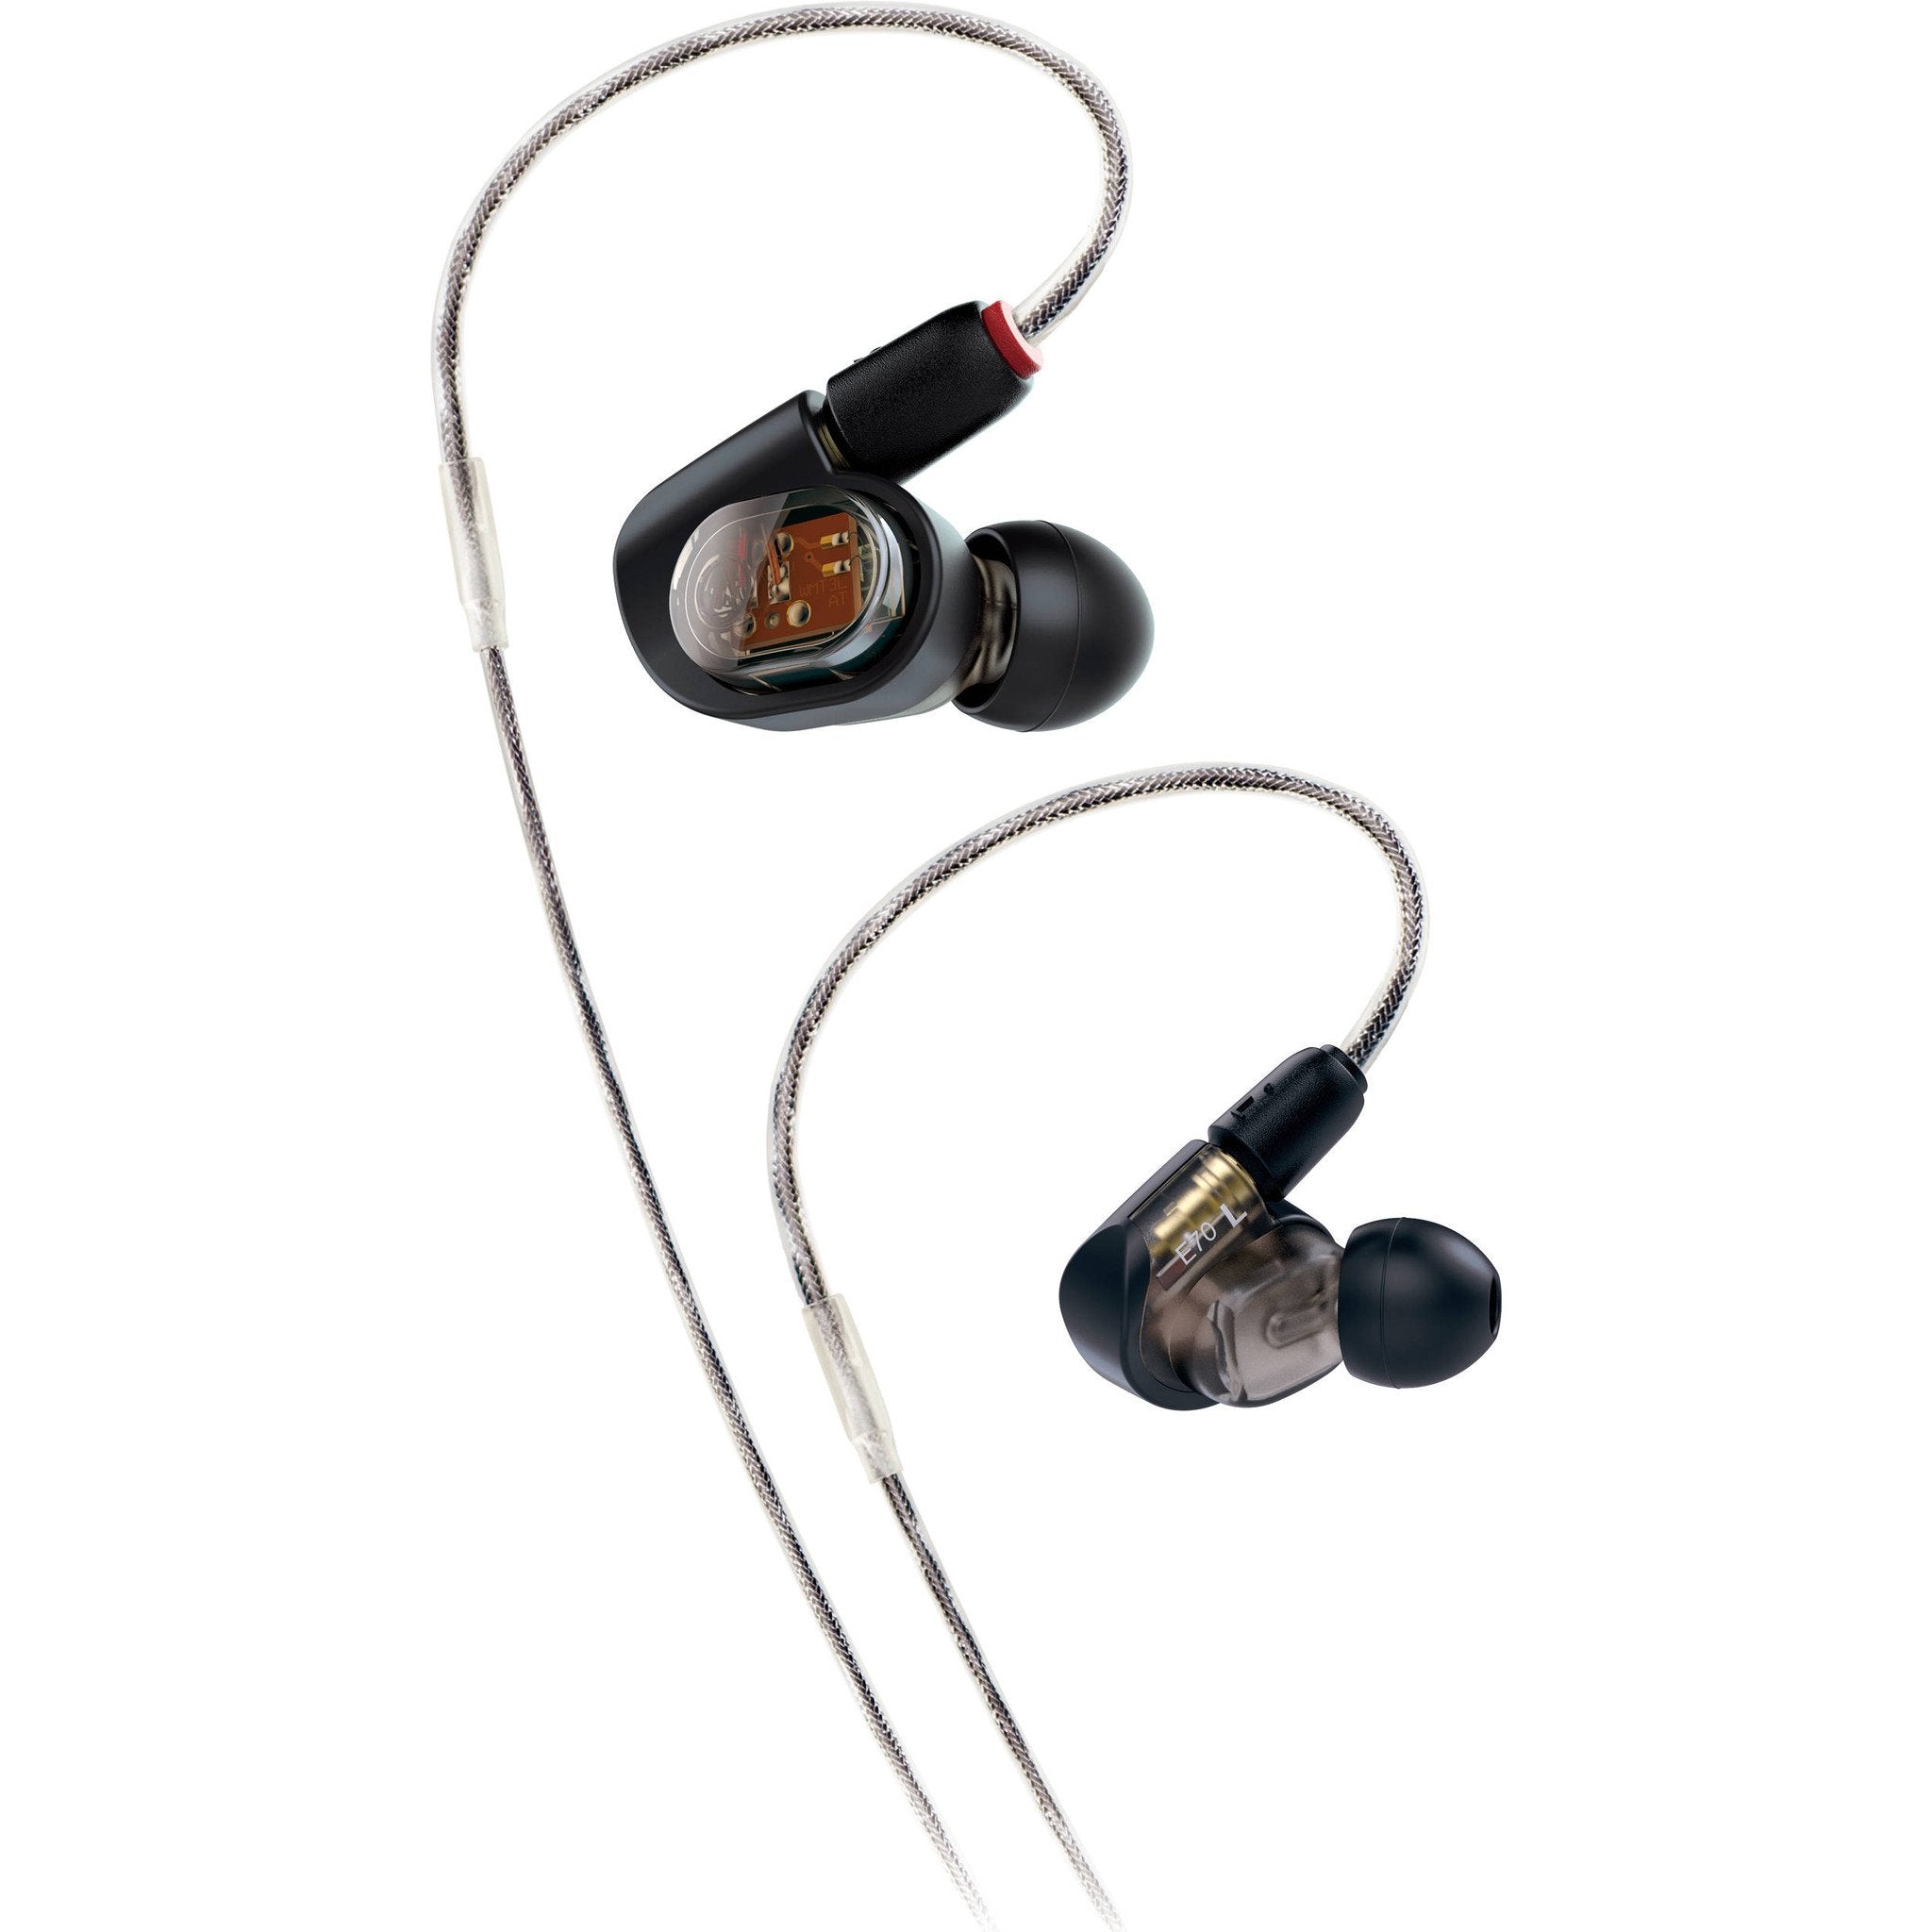 Audio-Technica: ATH-E70 Professional In-Ear Monitor Earphones